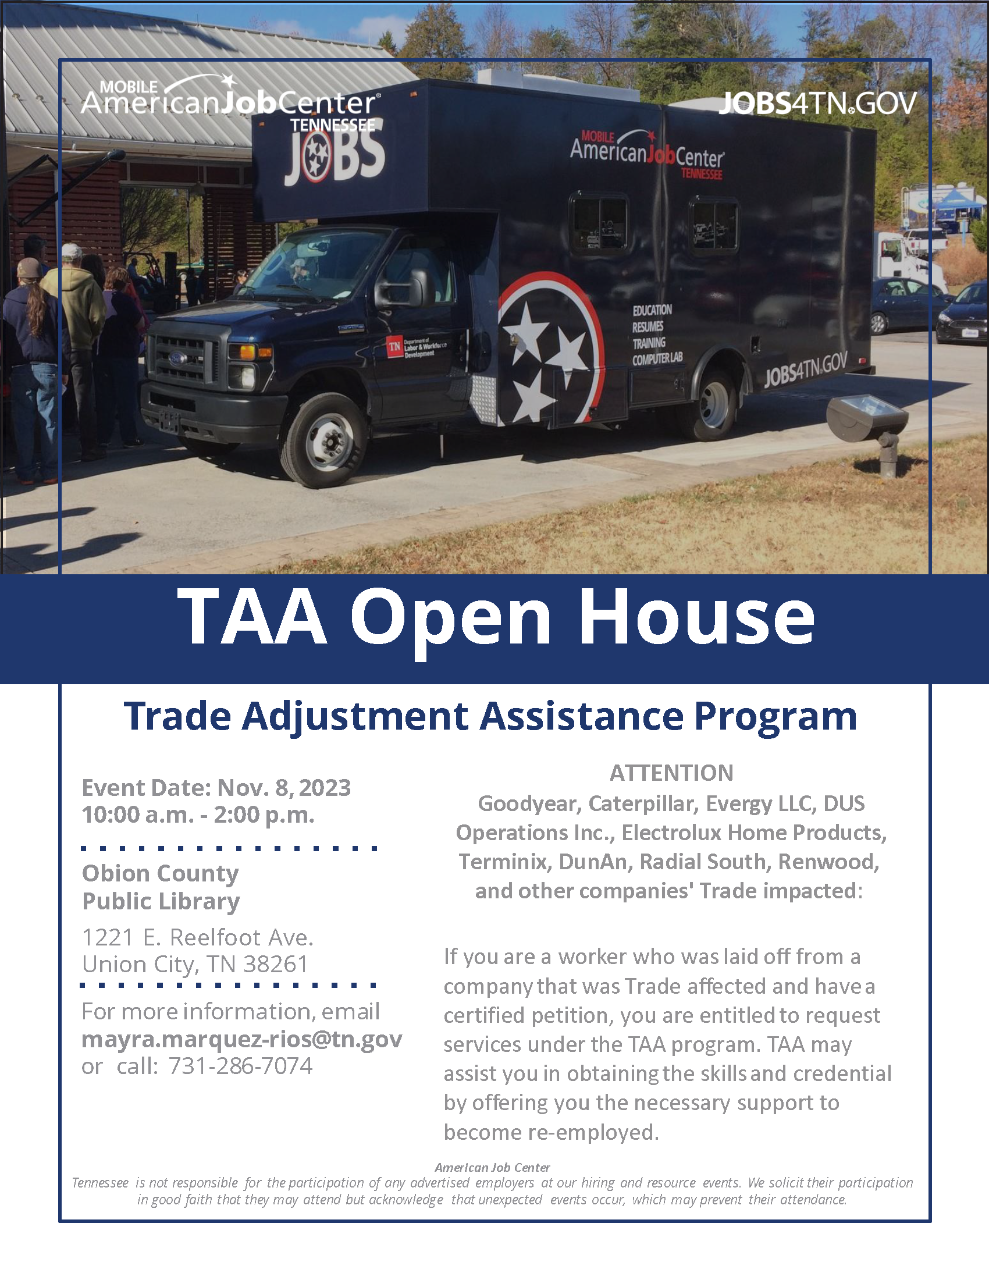 TAA Open House - Union City, TN, 11/8/2023, Obion County Public Library